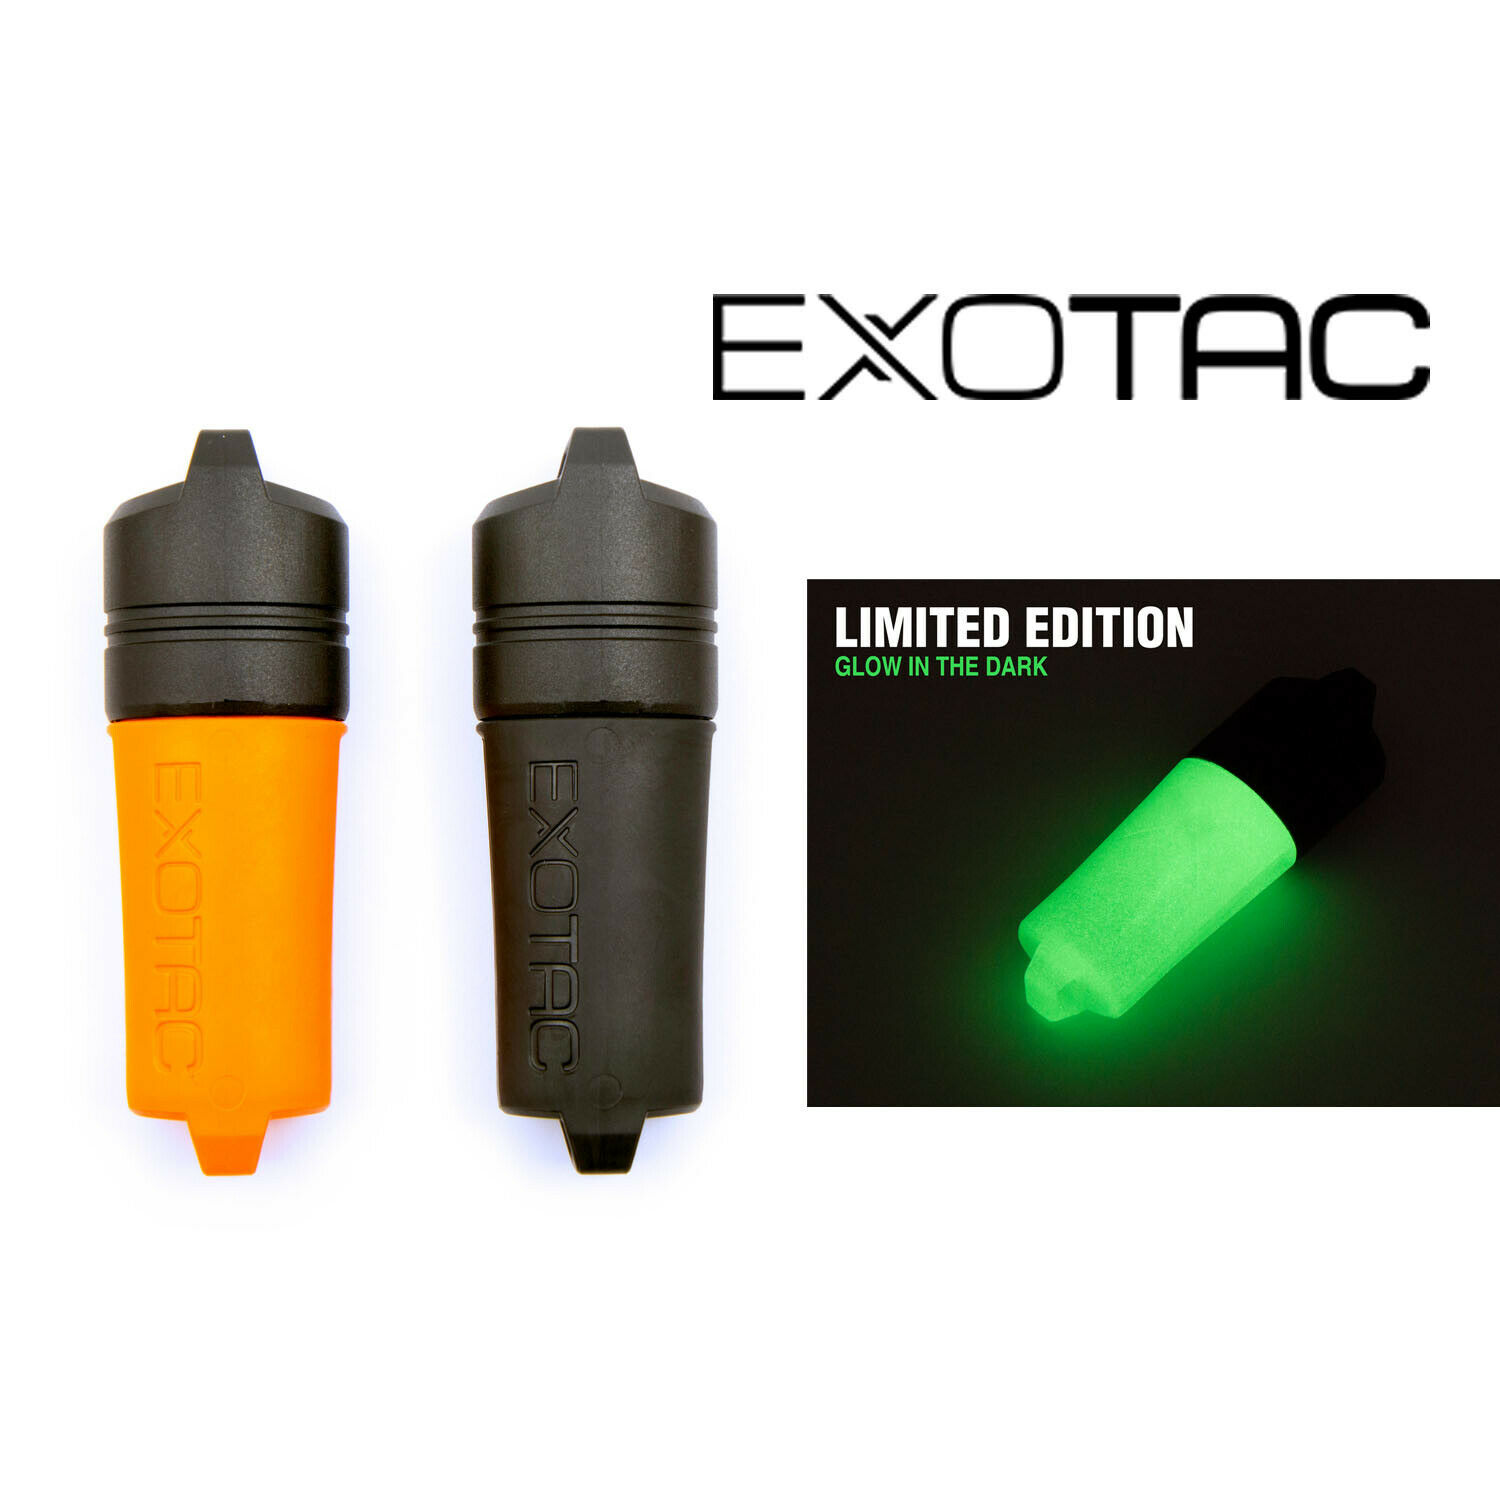 Exotac Firesleeve Ruggedized Waterproof Lighter Case Fits Bic Survival Camping